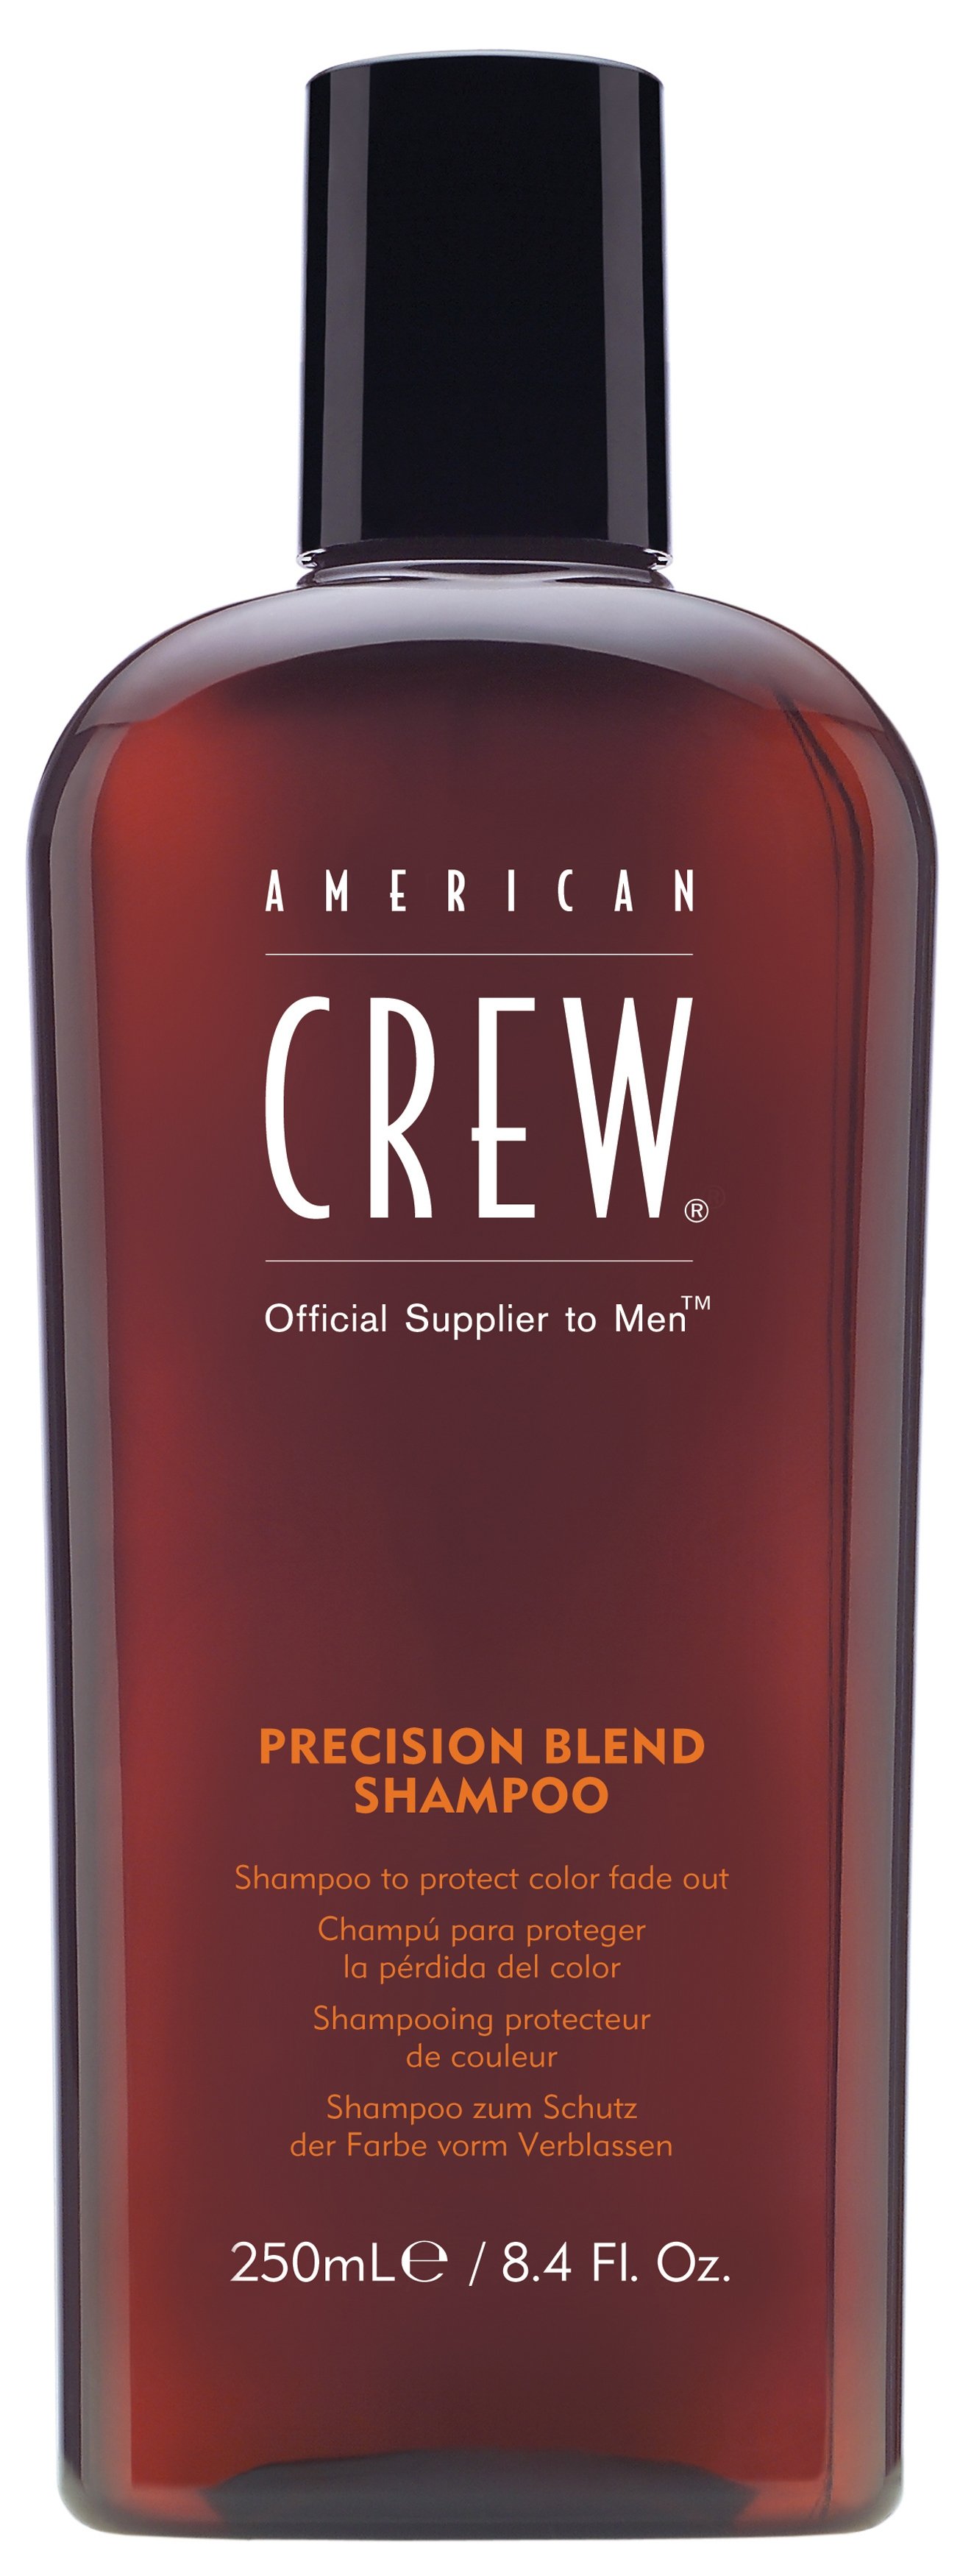 Мужские шампуни:  AMERICAN CREW -  Шампунь для окрашенных волос Precision Blend (250 мл)